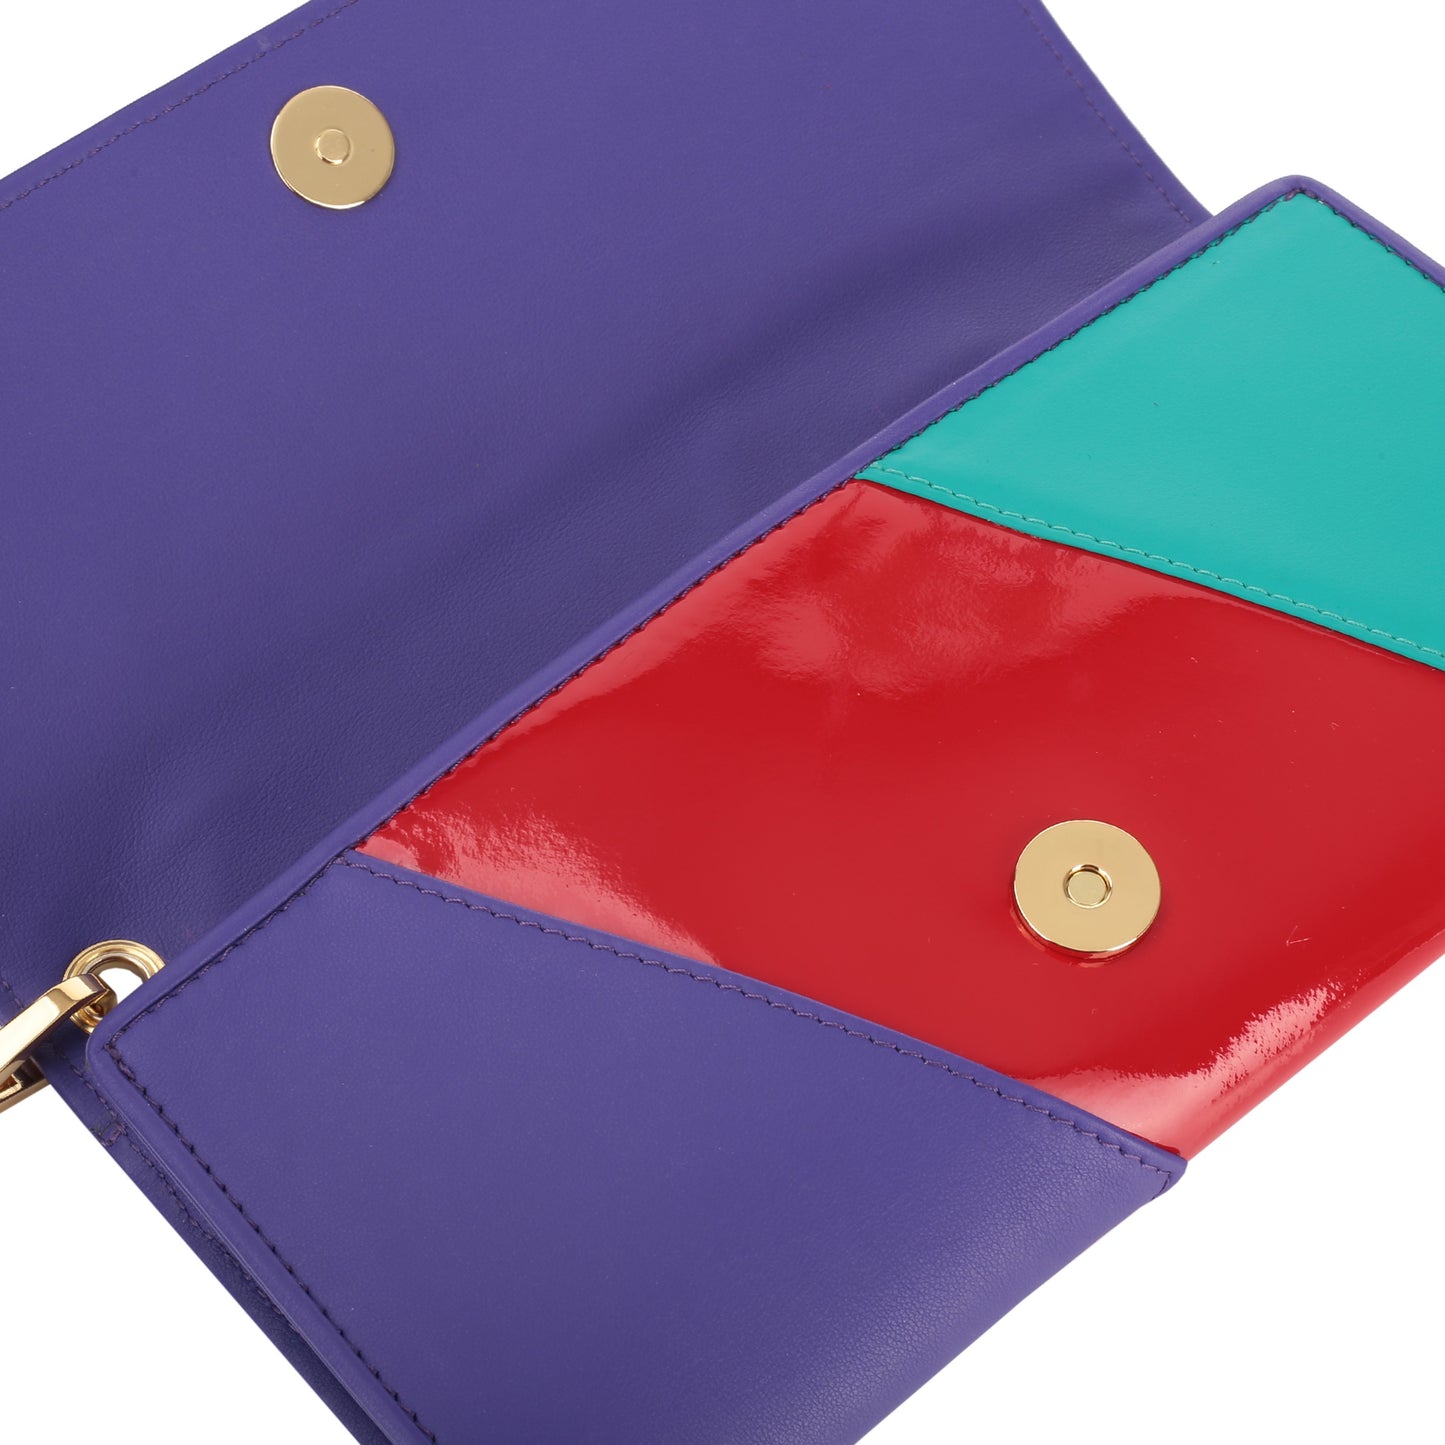 CHIC multicolor women's leather clutch bag